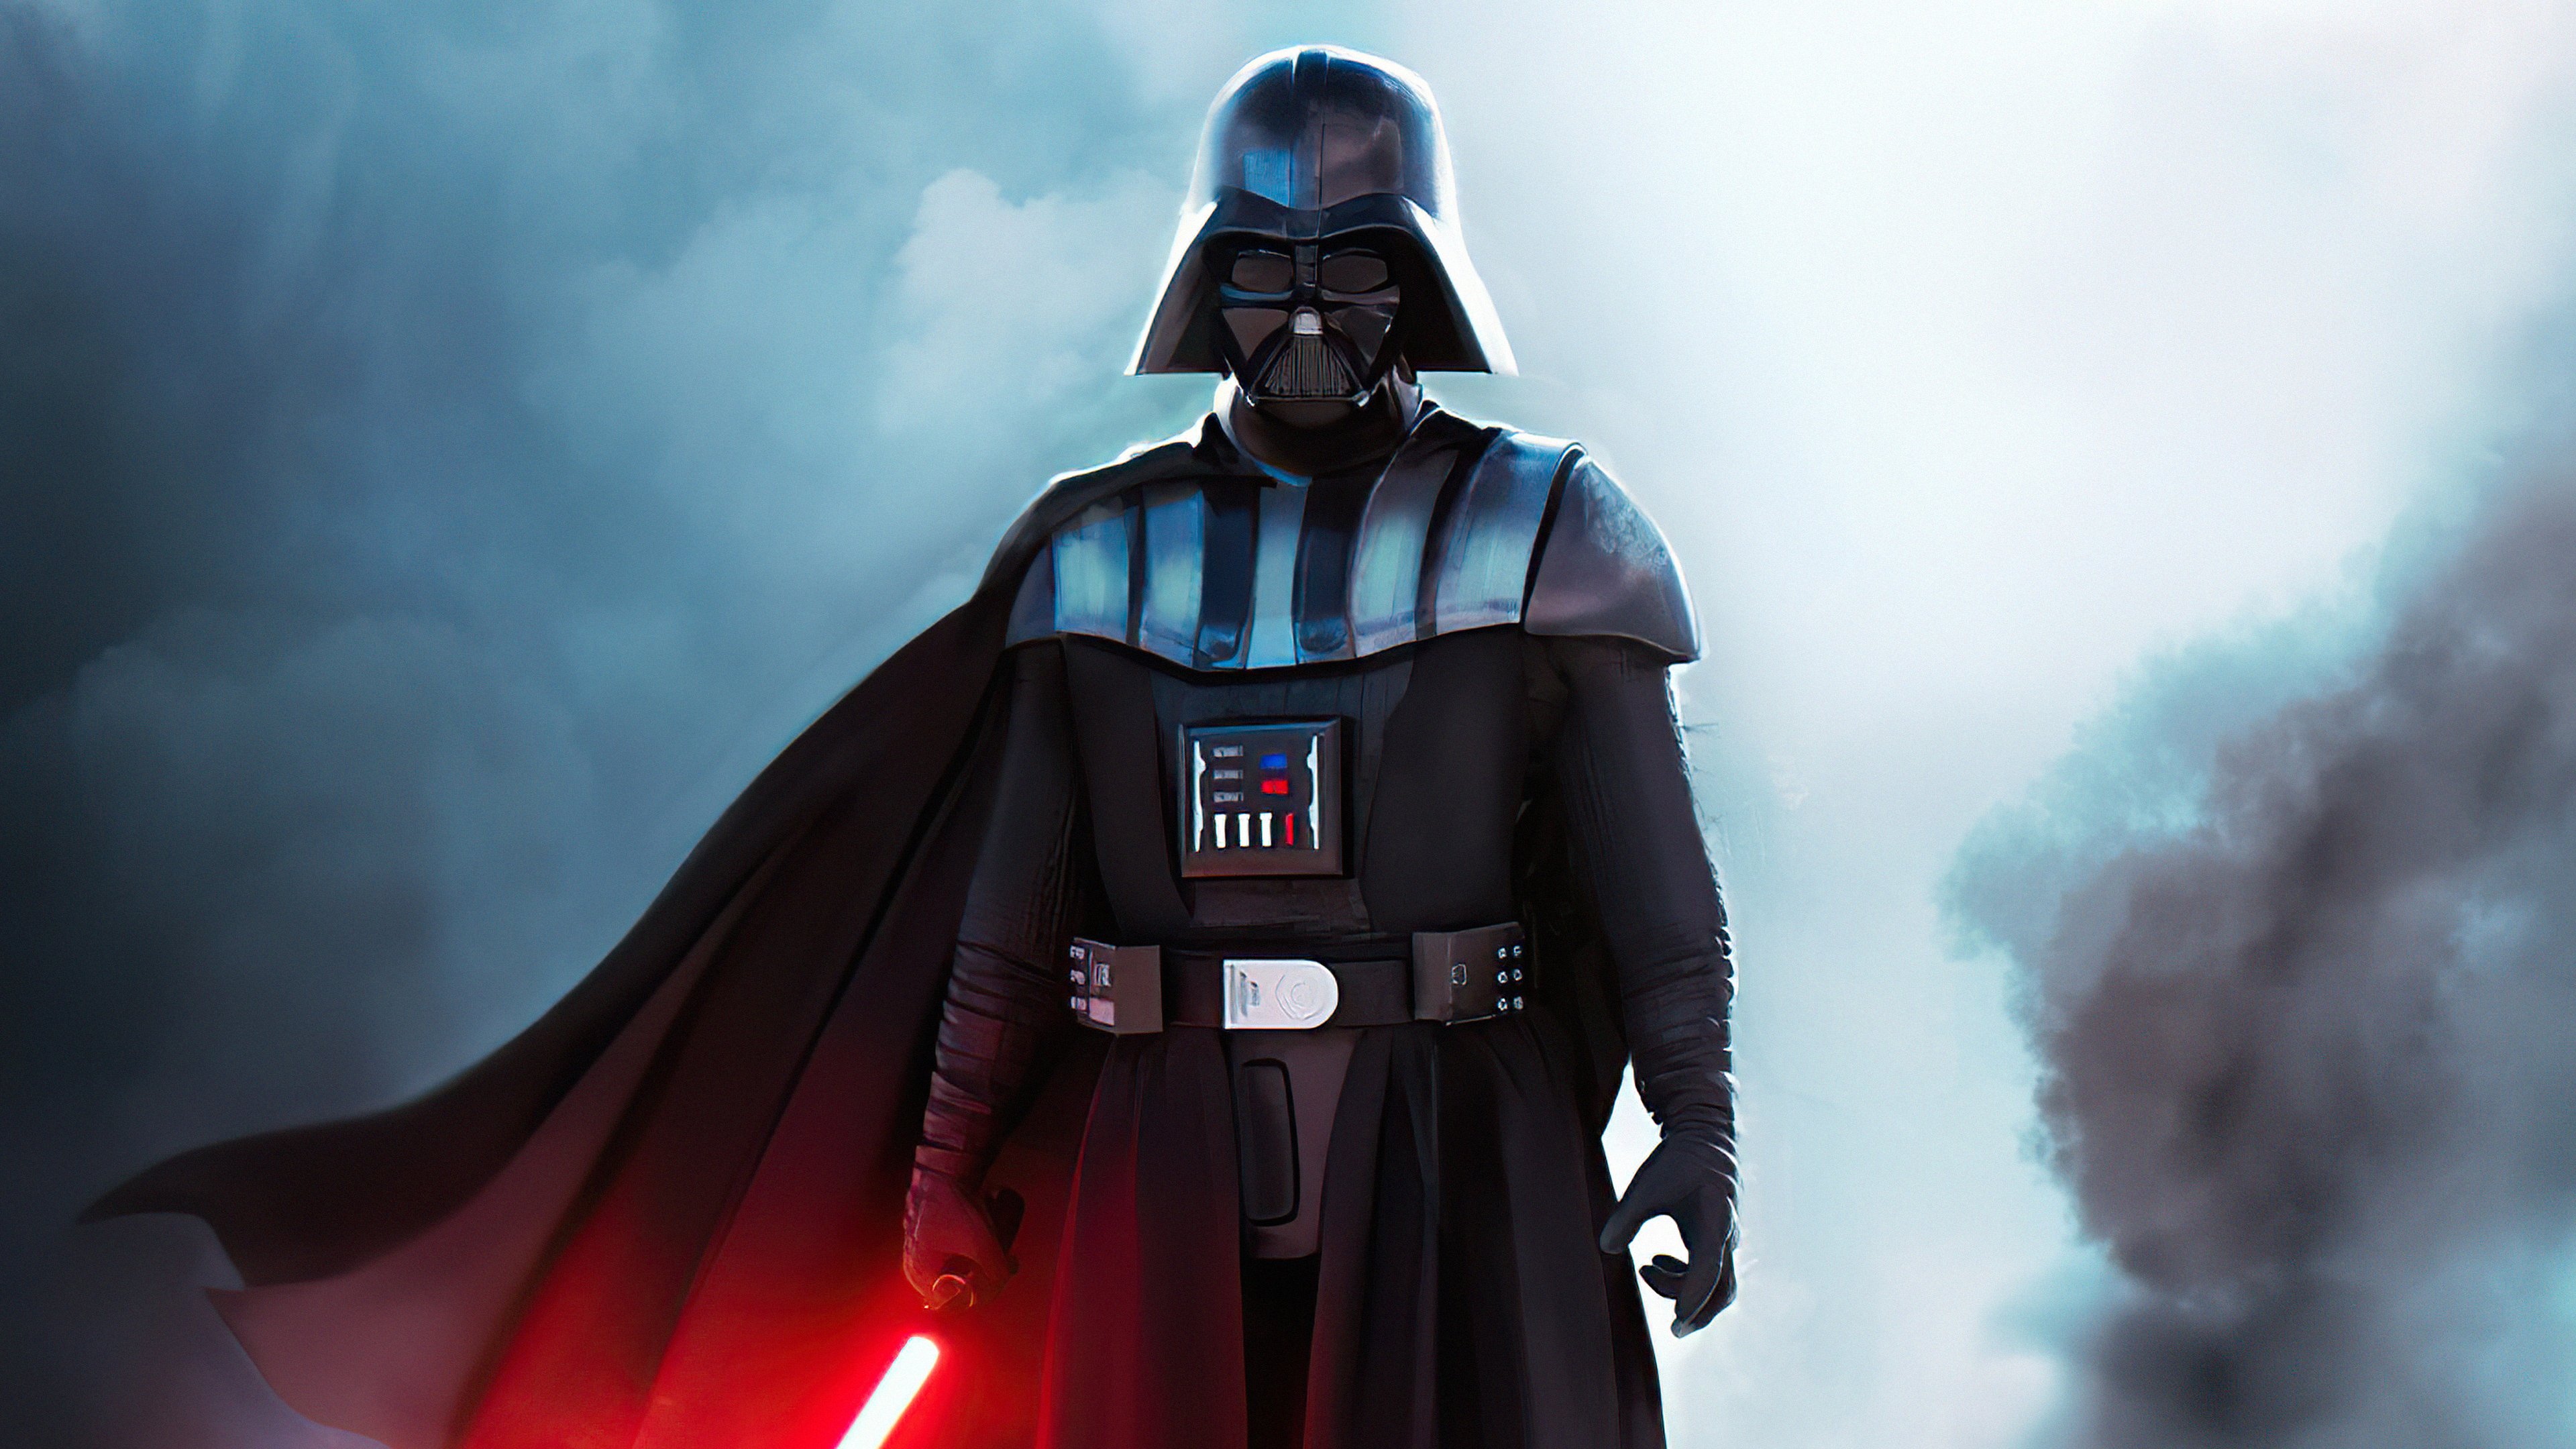 Wallpaper Darth Vader with red lightsaber